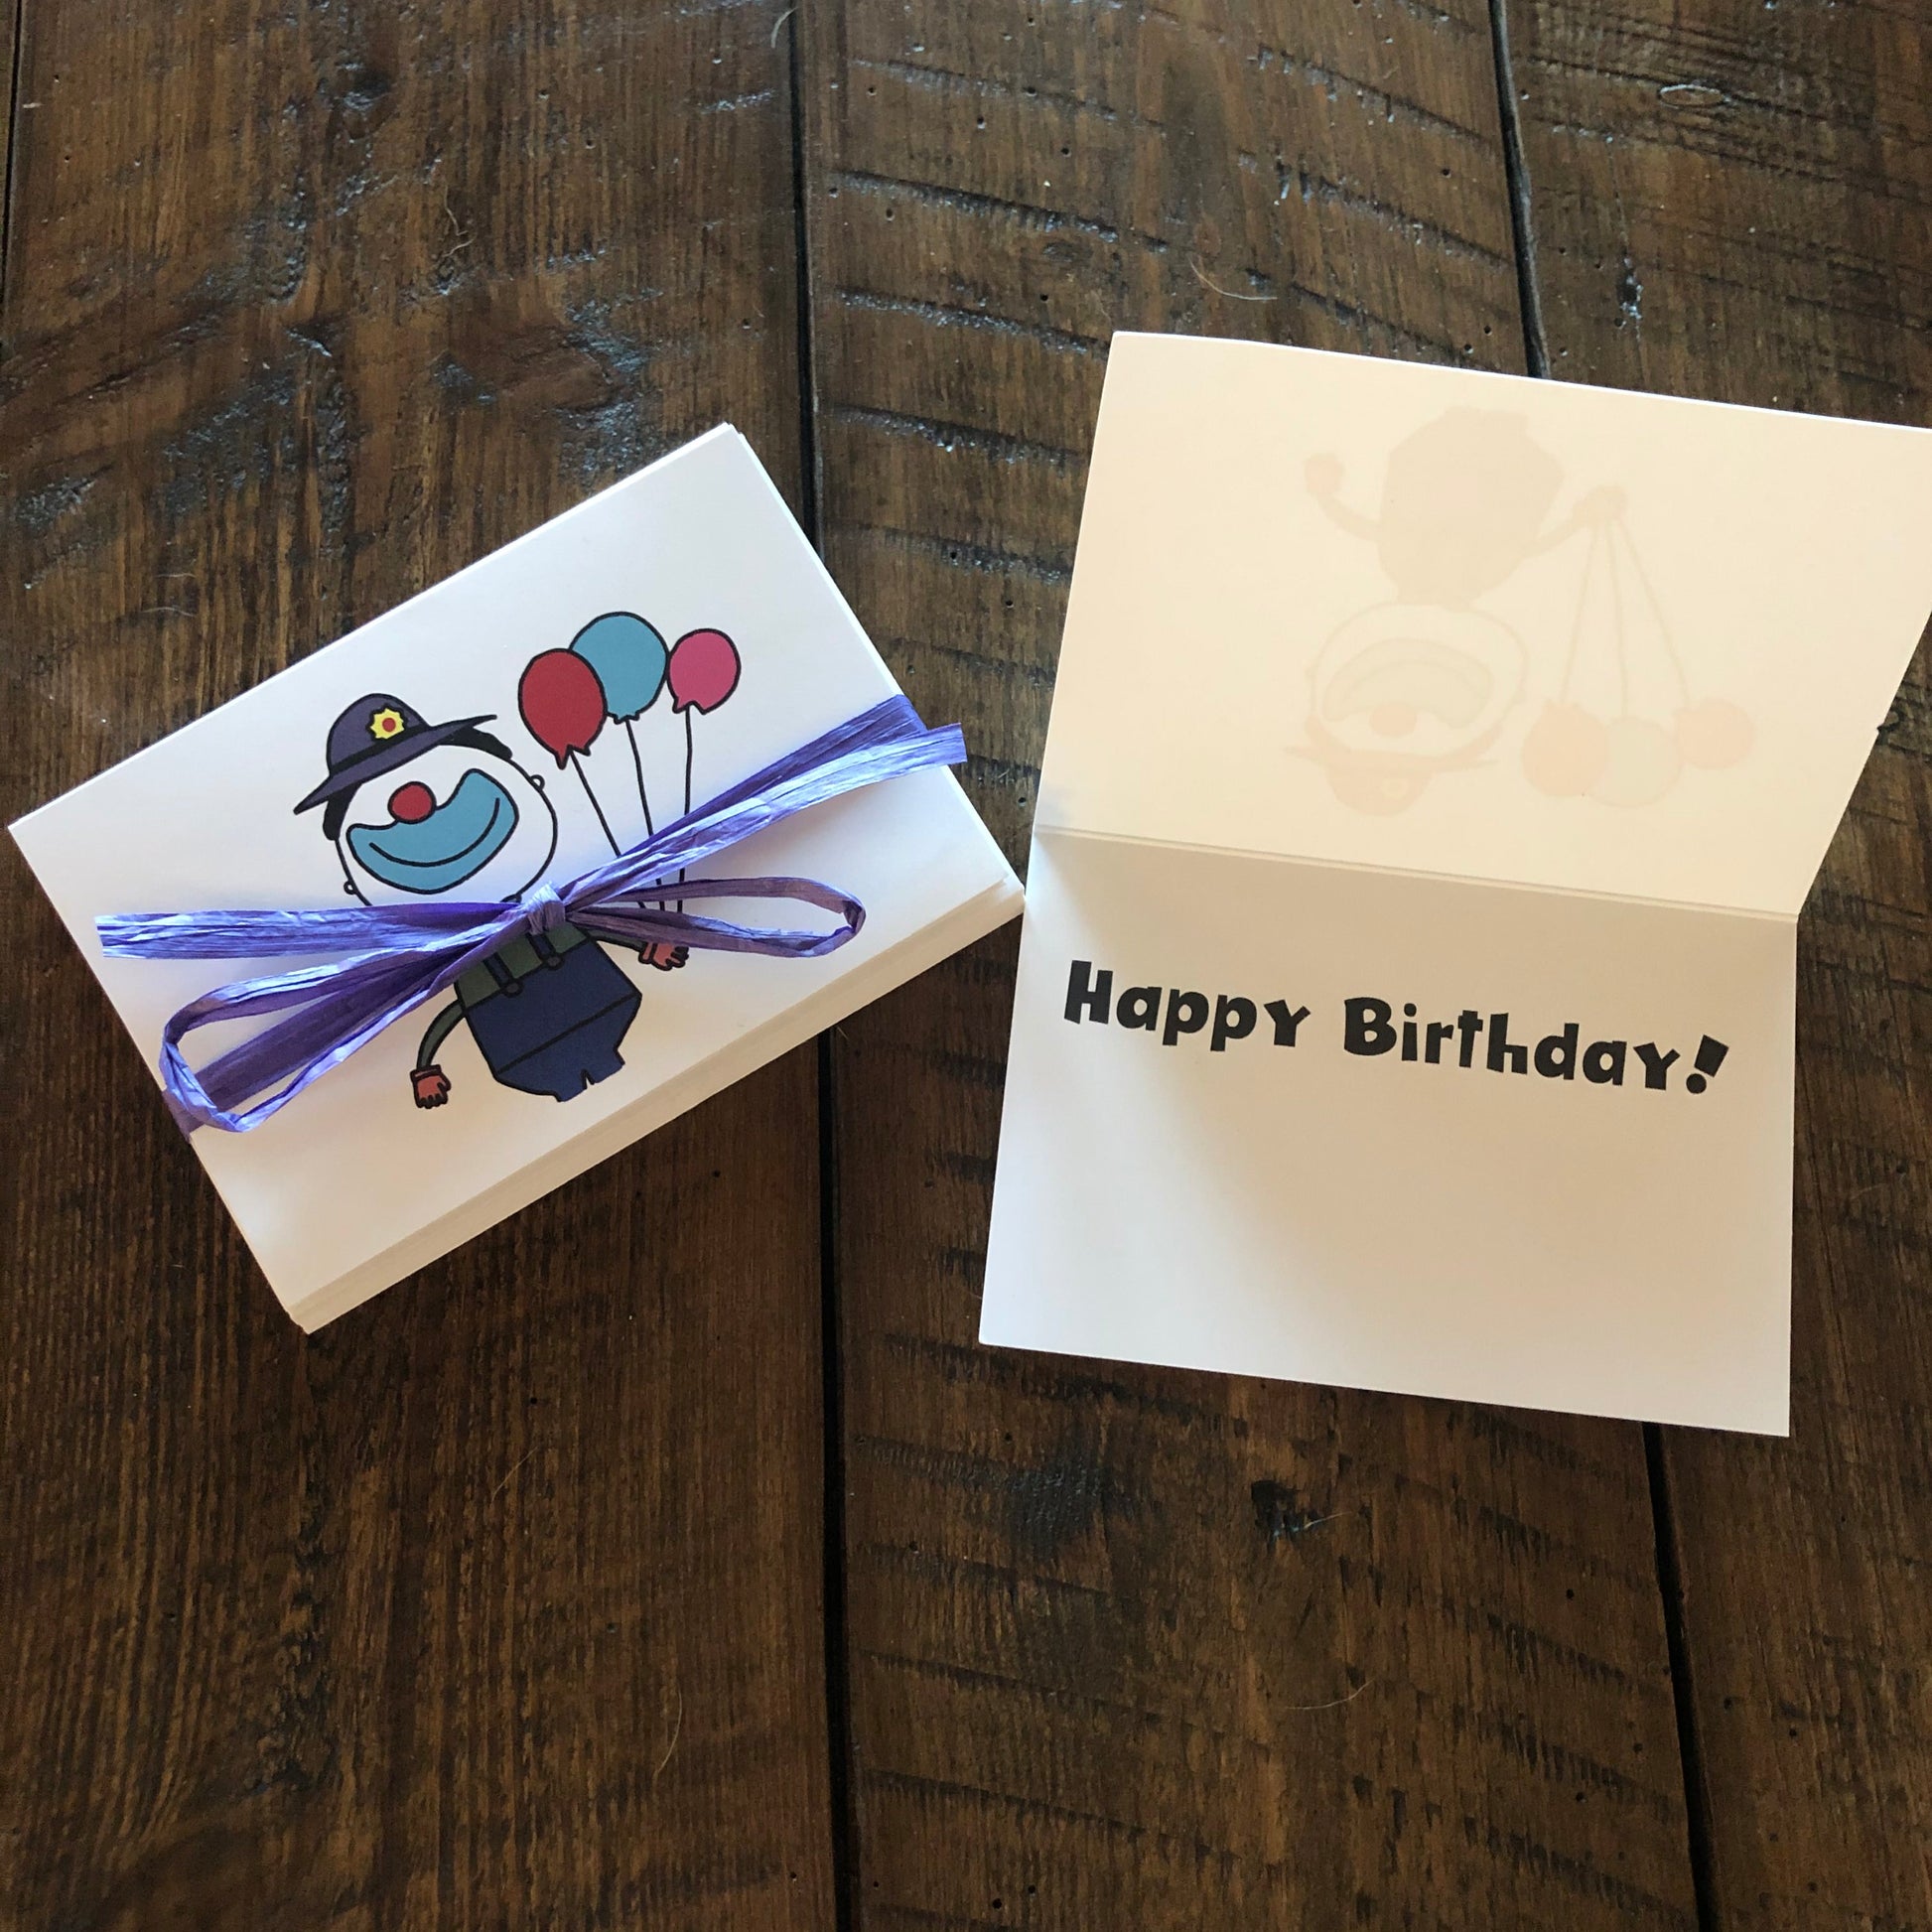 Birthday clown notecards with happy birthday printed inside